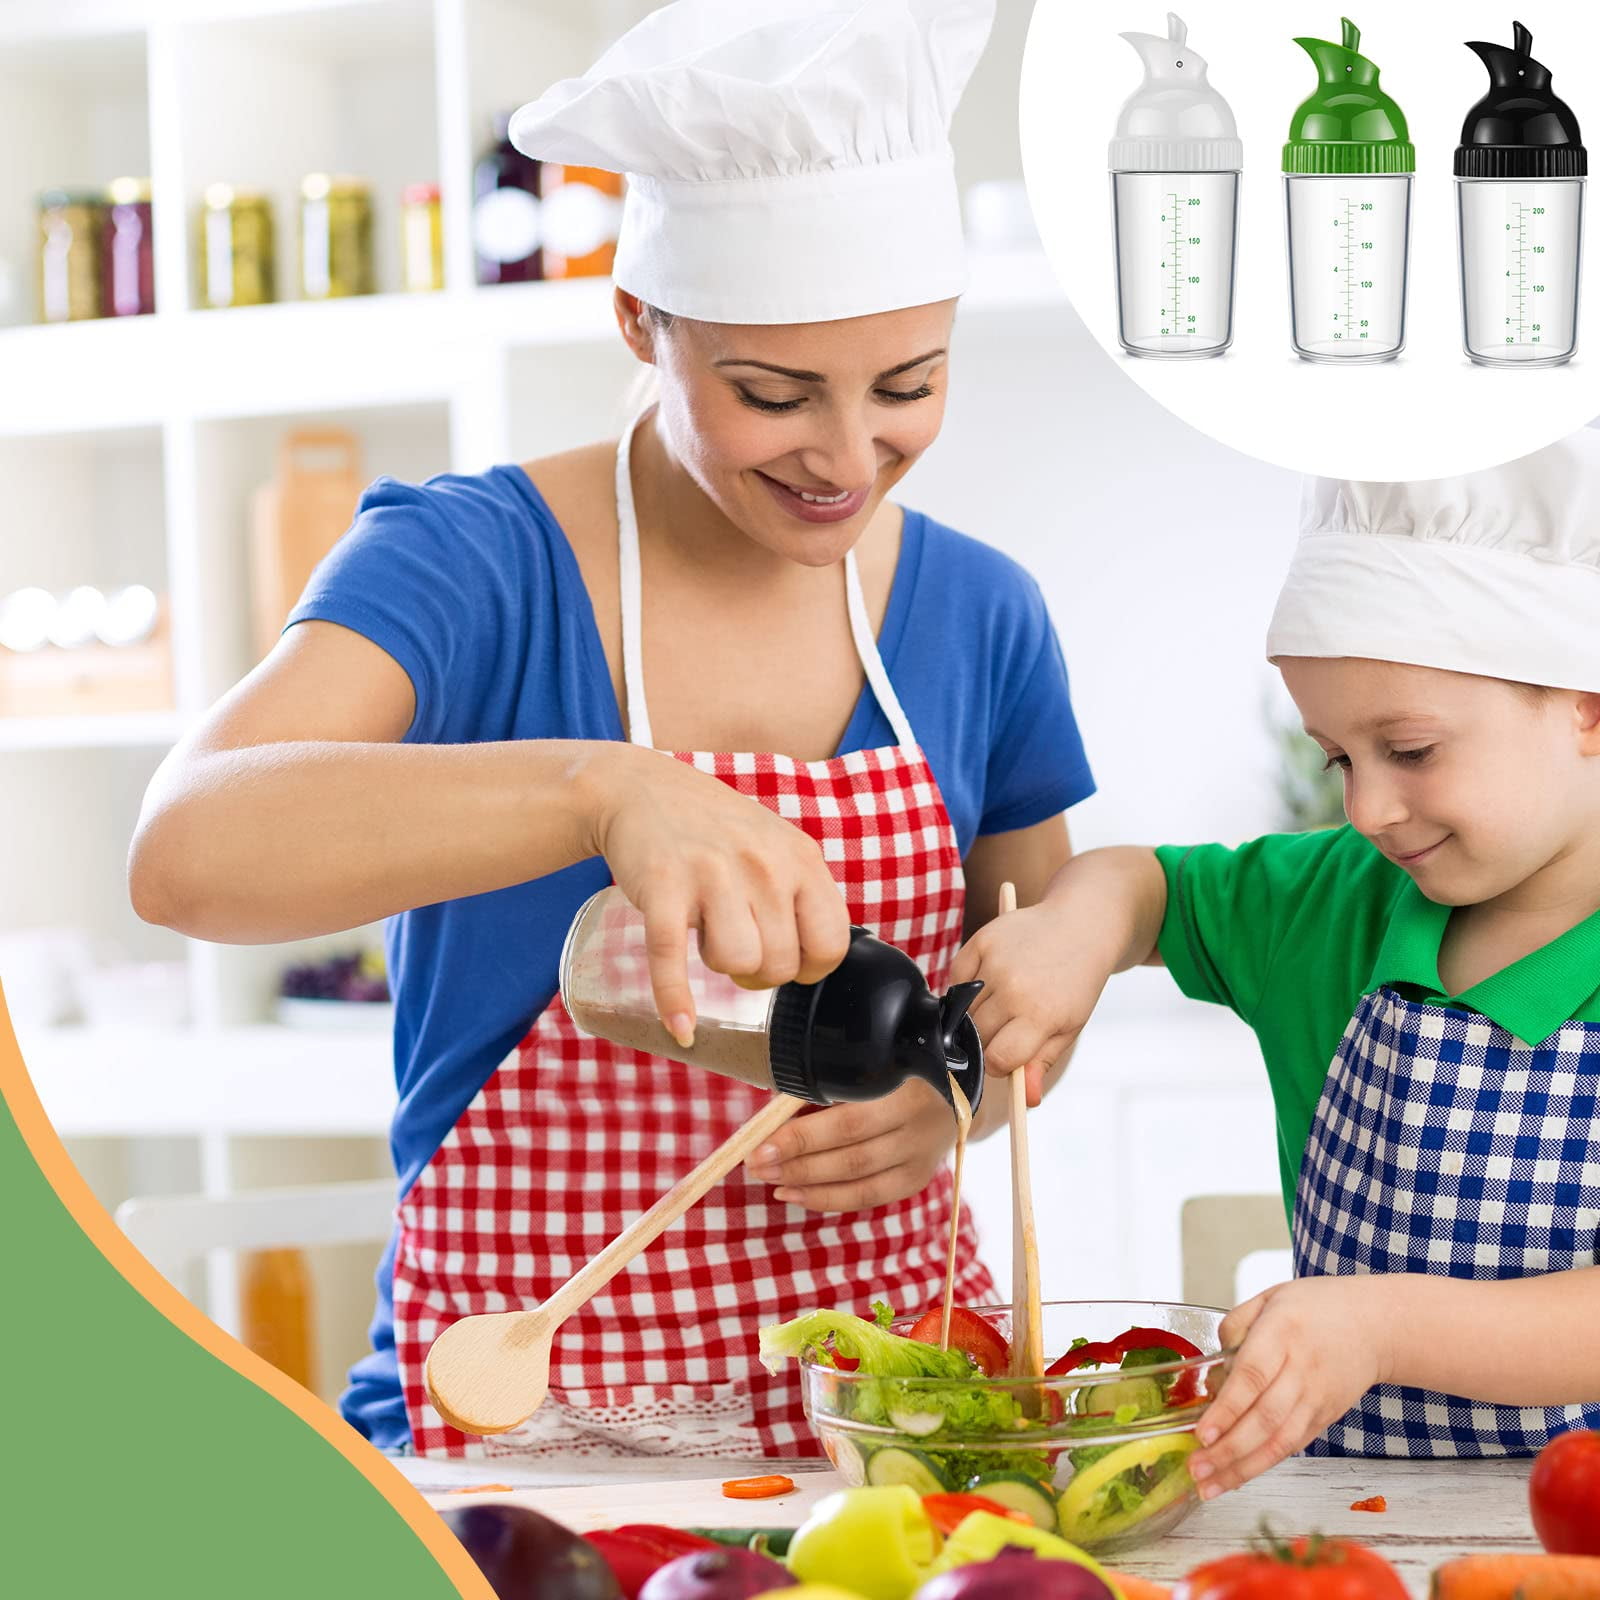 200ml Salad Dressing Shaker BPA Prevent Leakage Salad Dressing Jar